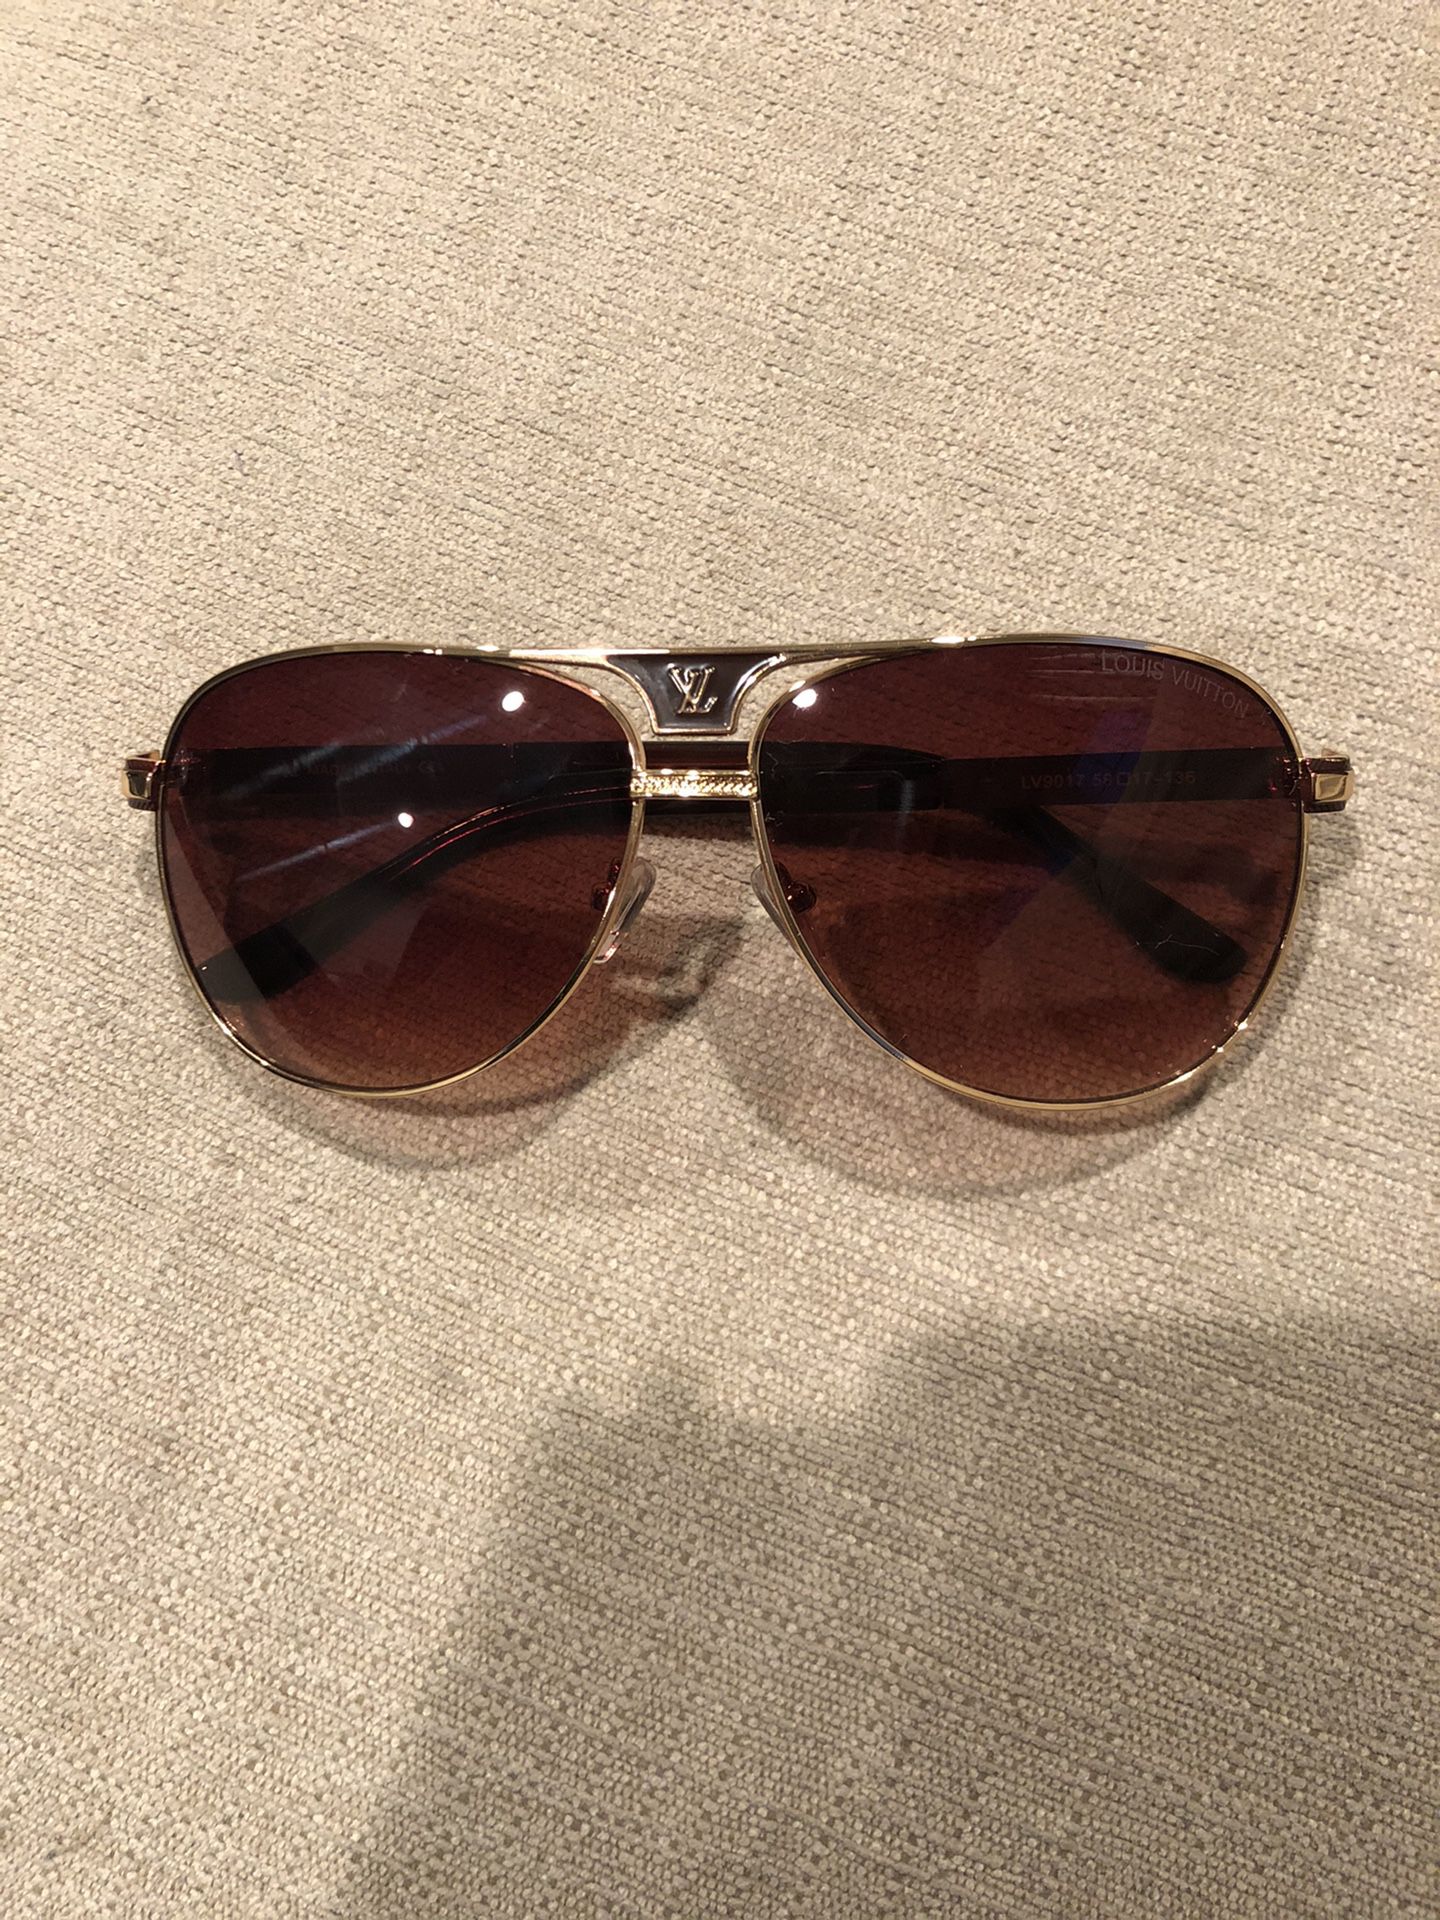 Louis Vuitton sunglasses. Unisex